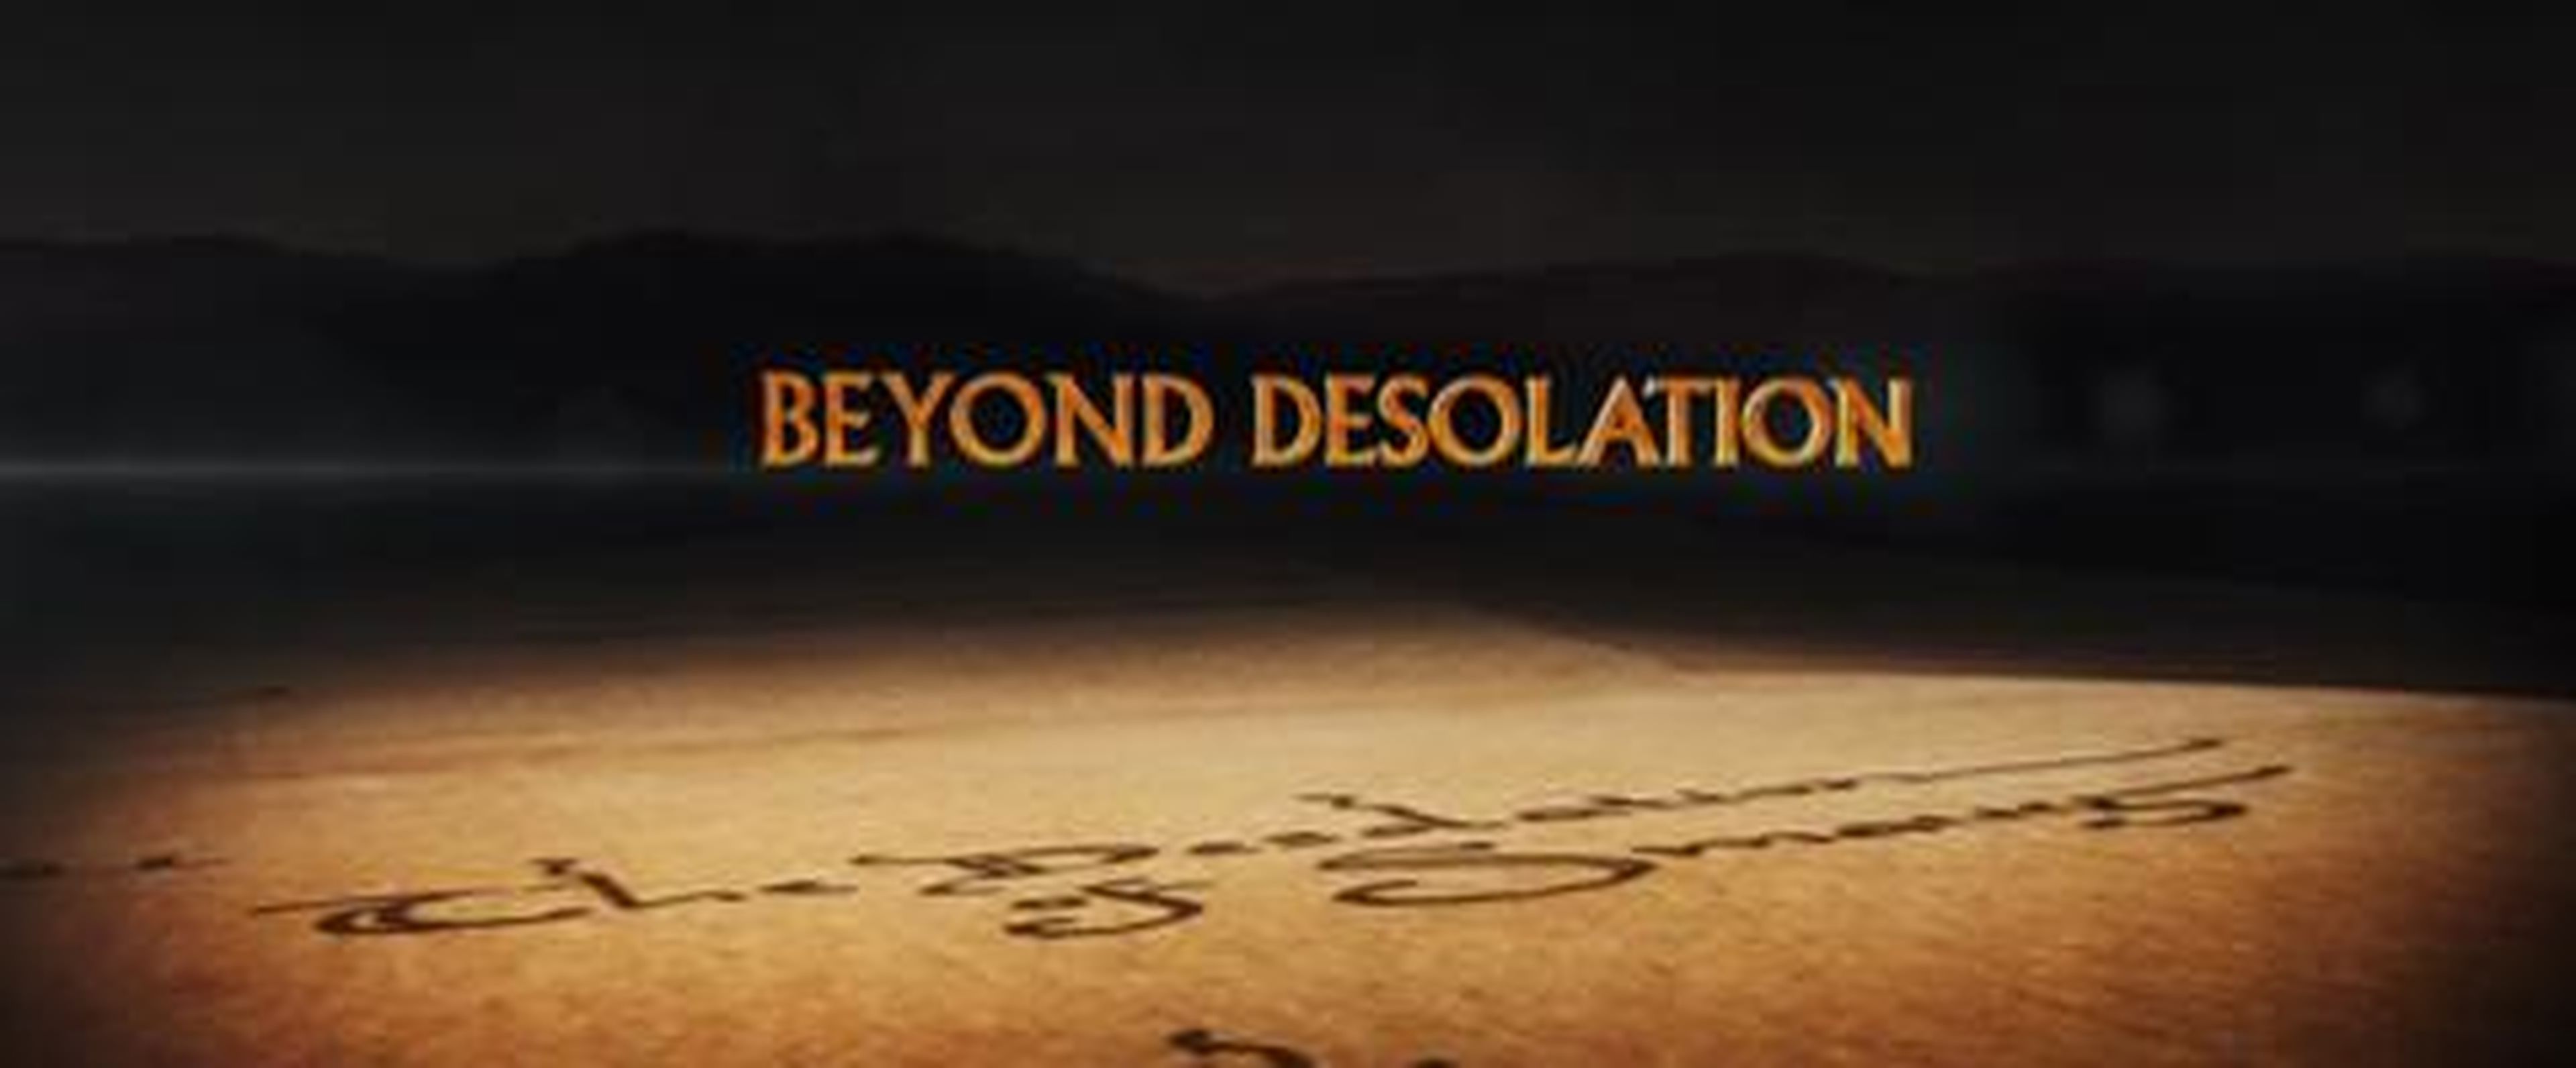 The Hobbit: The Desolation of Smaug -- Teaser Trailer - Official Warner Bros. UK